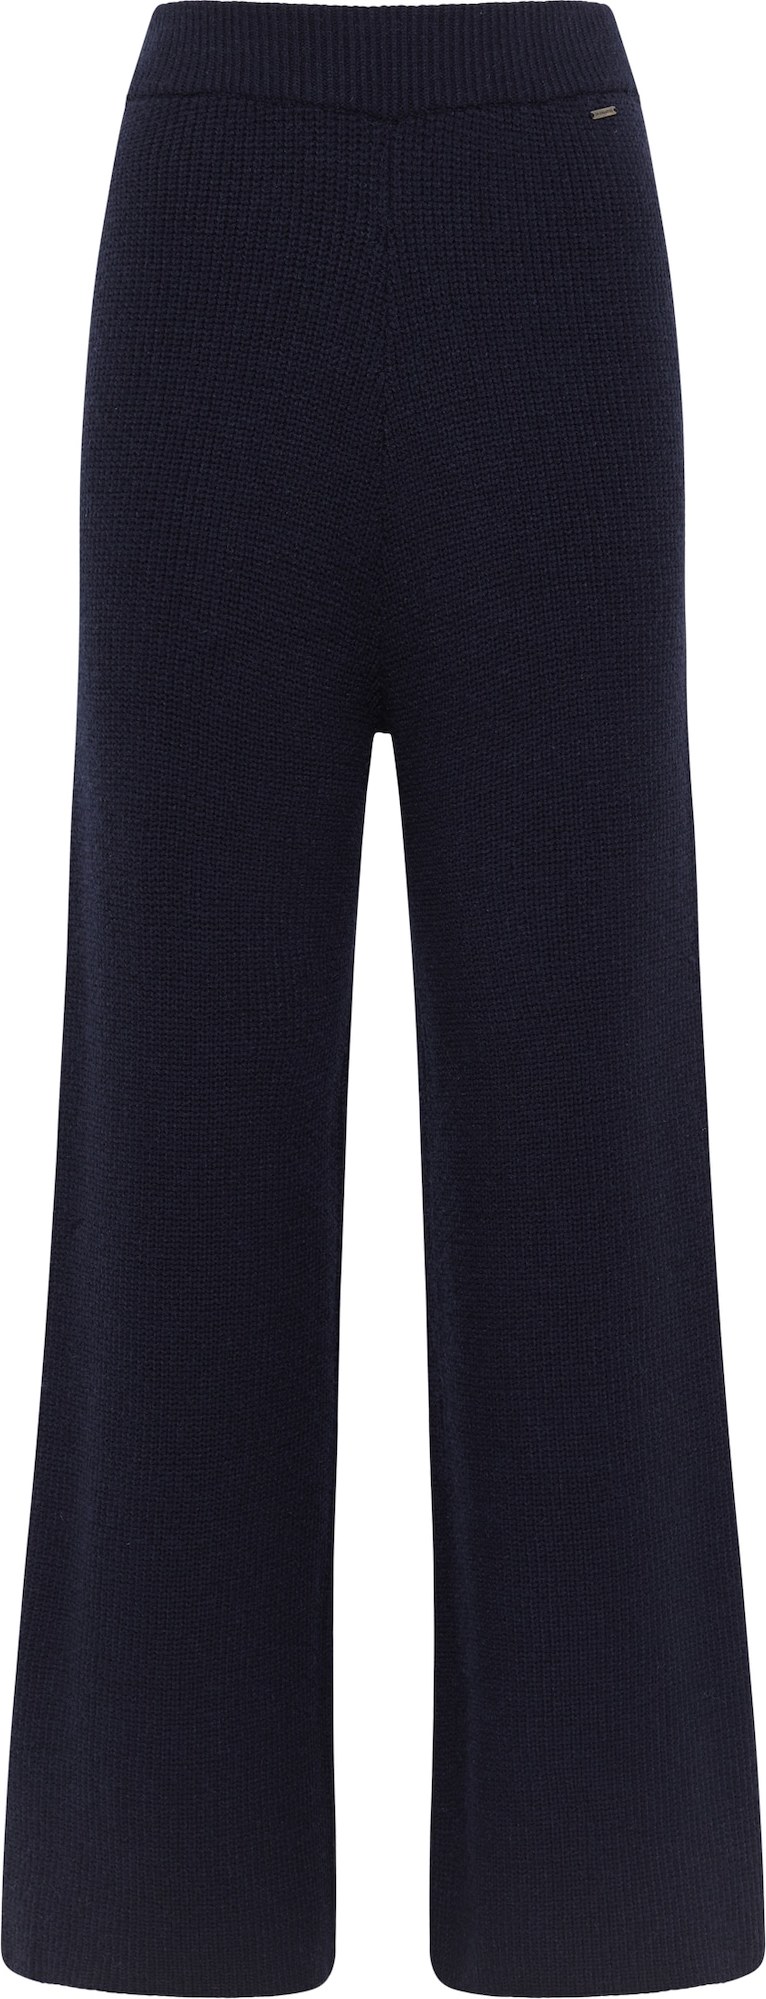 DreiMaster Vintage Kalhoty marine modrá